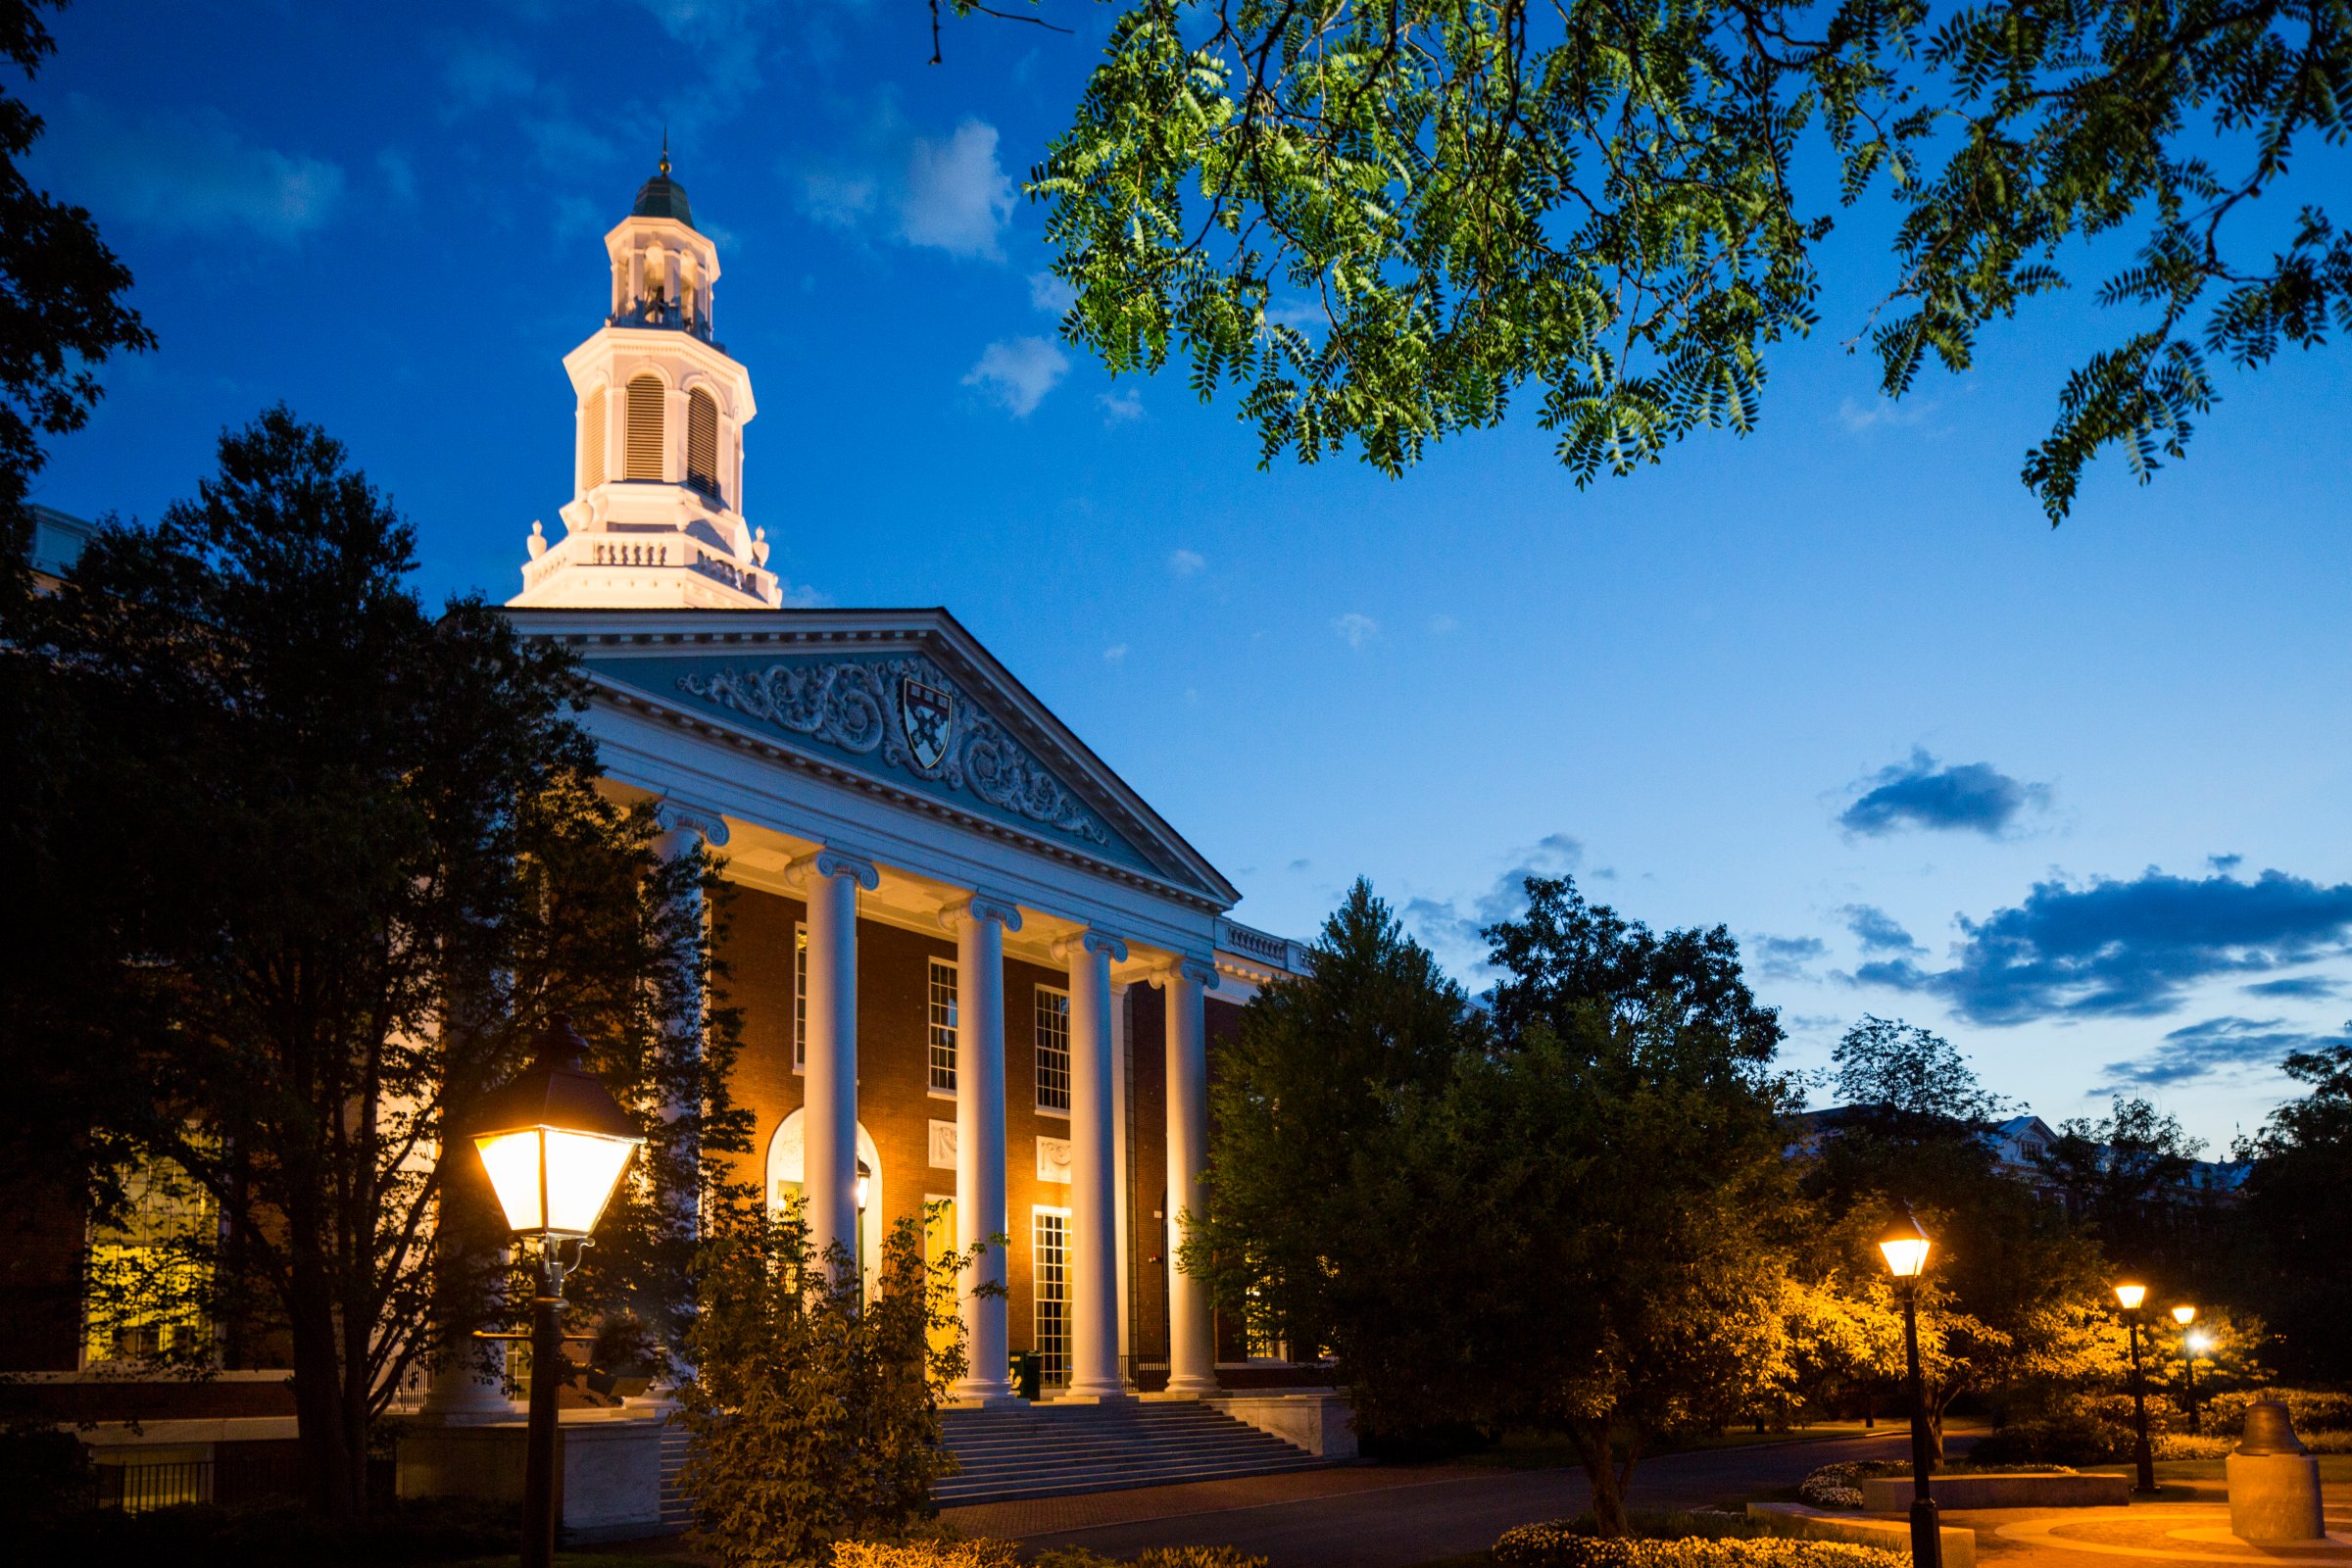 The Harvard Business School Campus